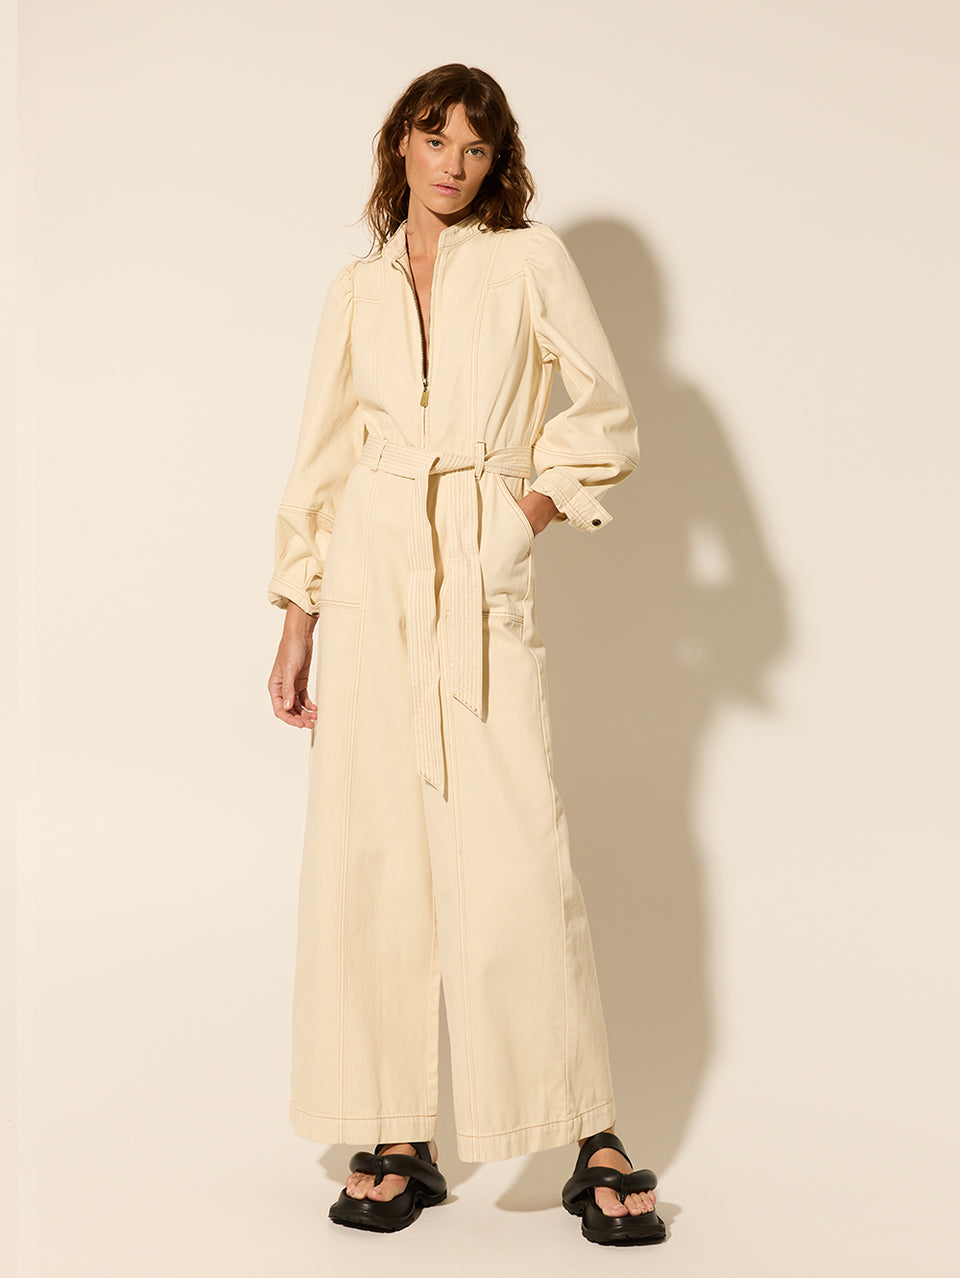 Lourdes Boilersuit Cream | Model wears cream boilersuit 